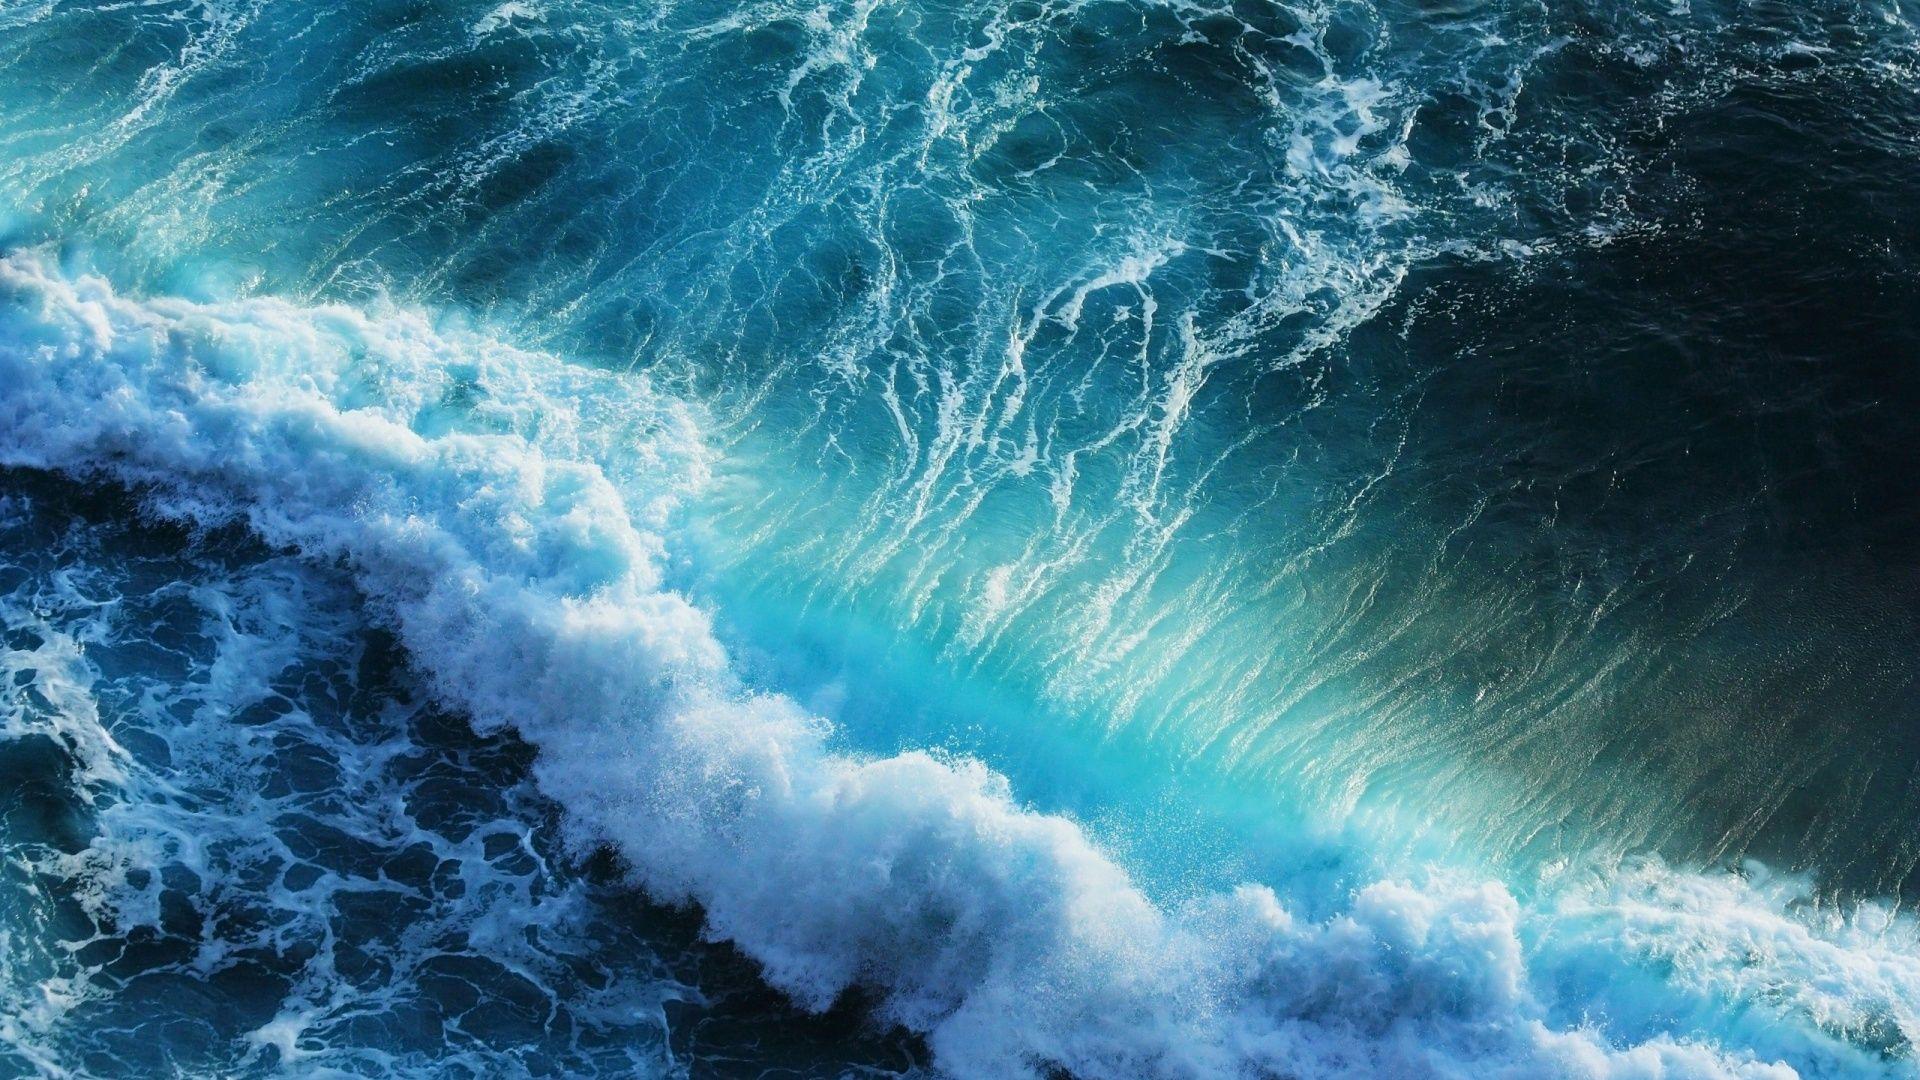 Pretty Ocean Wallpaper 19122 1920x1080 px